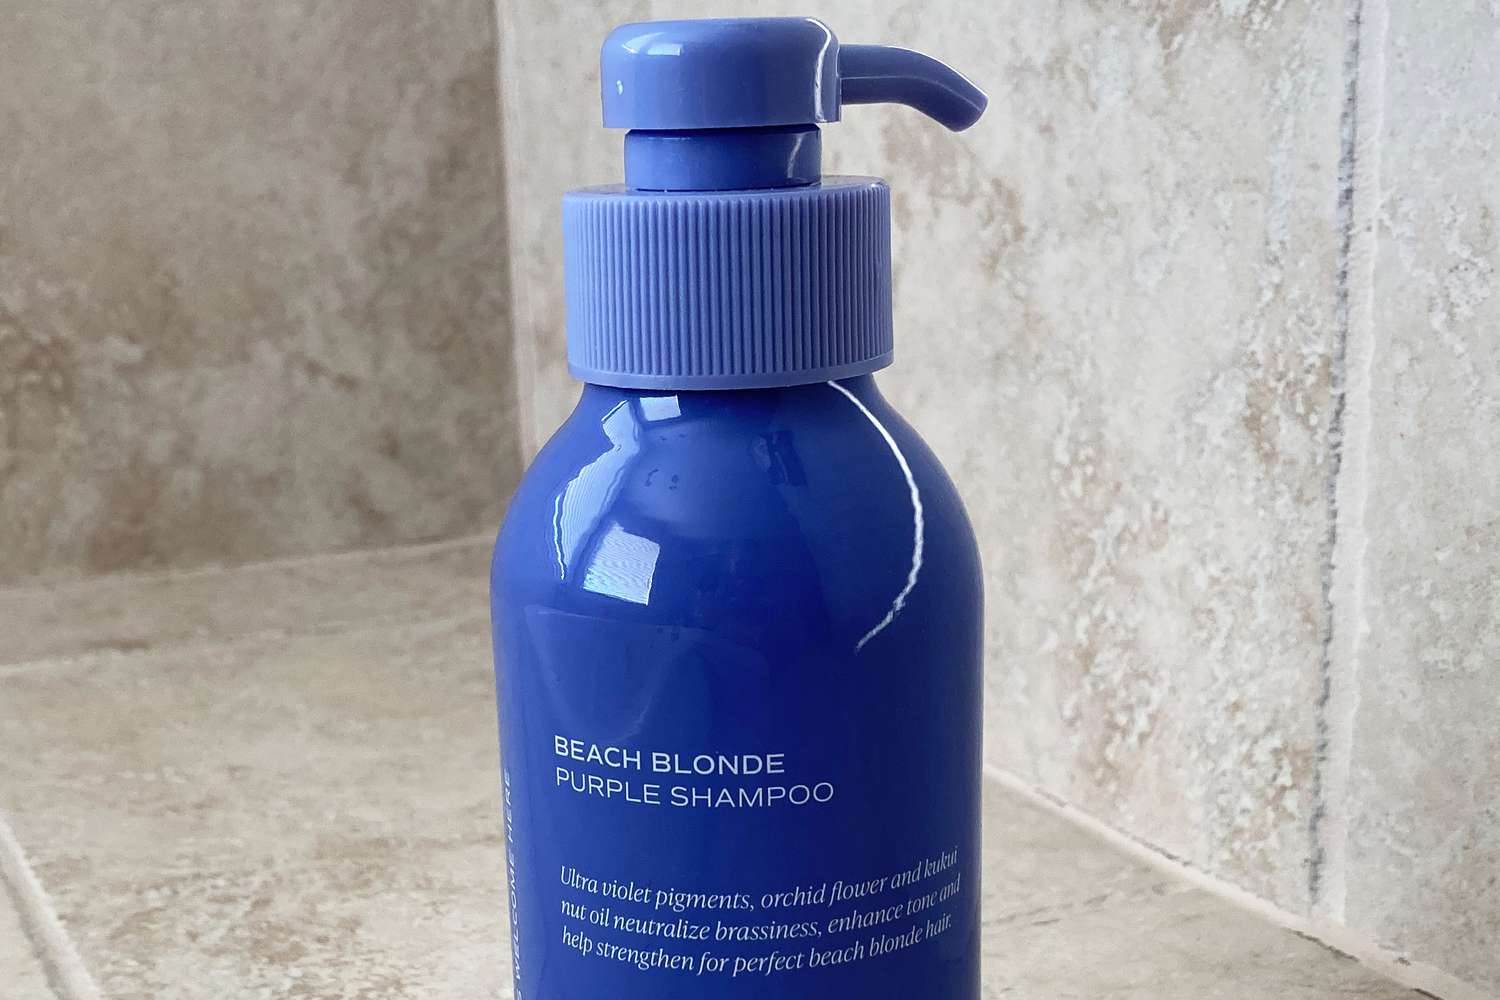 A bottle of Saltair Beach Blonde Shampoo